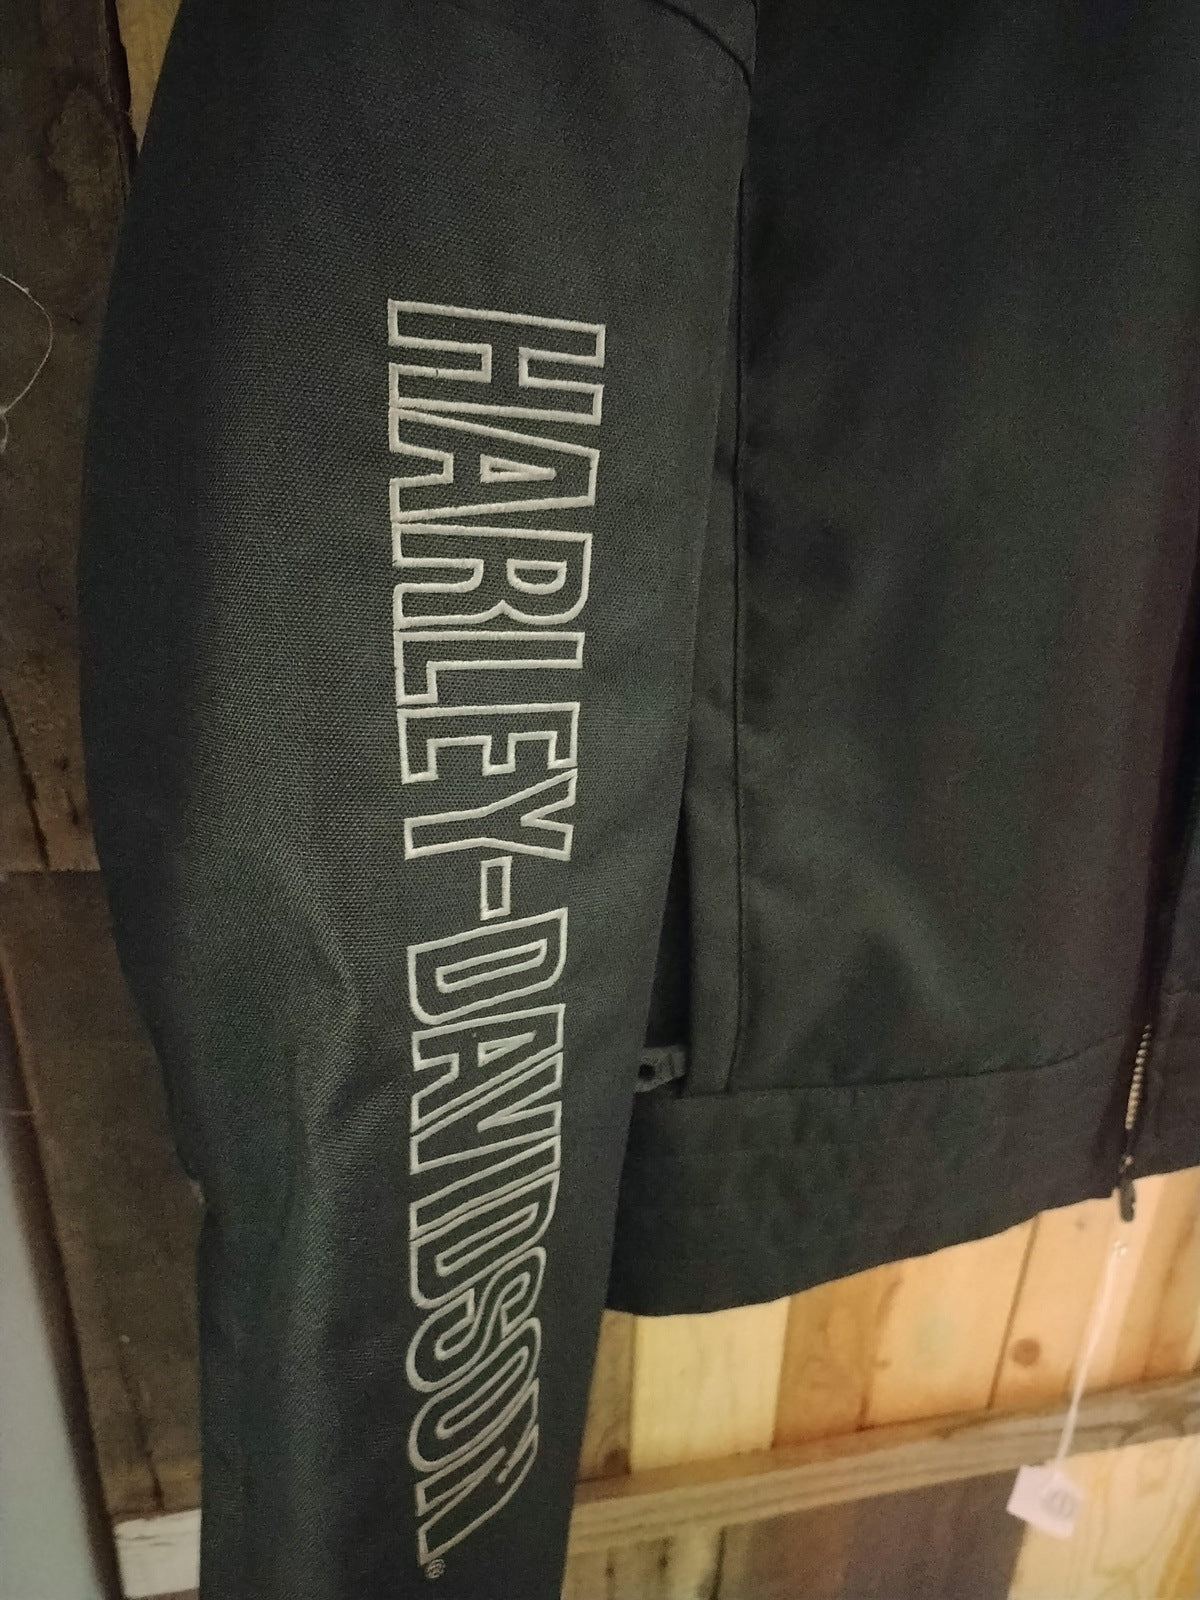 Harley Davidson Official Merchandise Men's Canvas Jacket Size Large